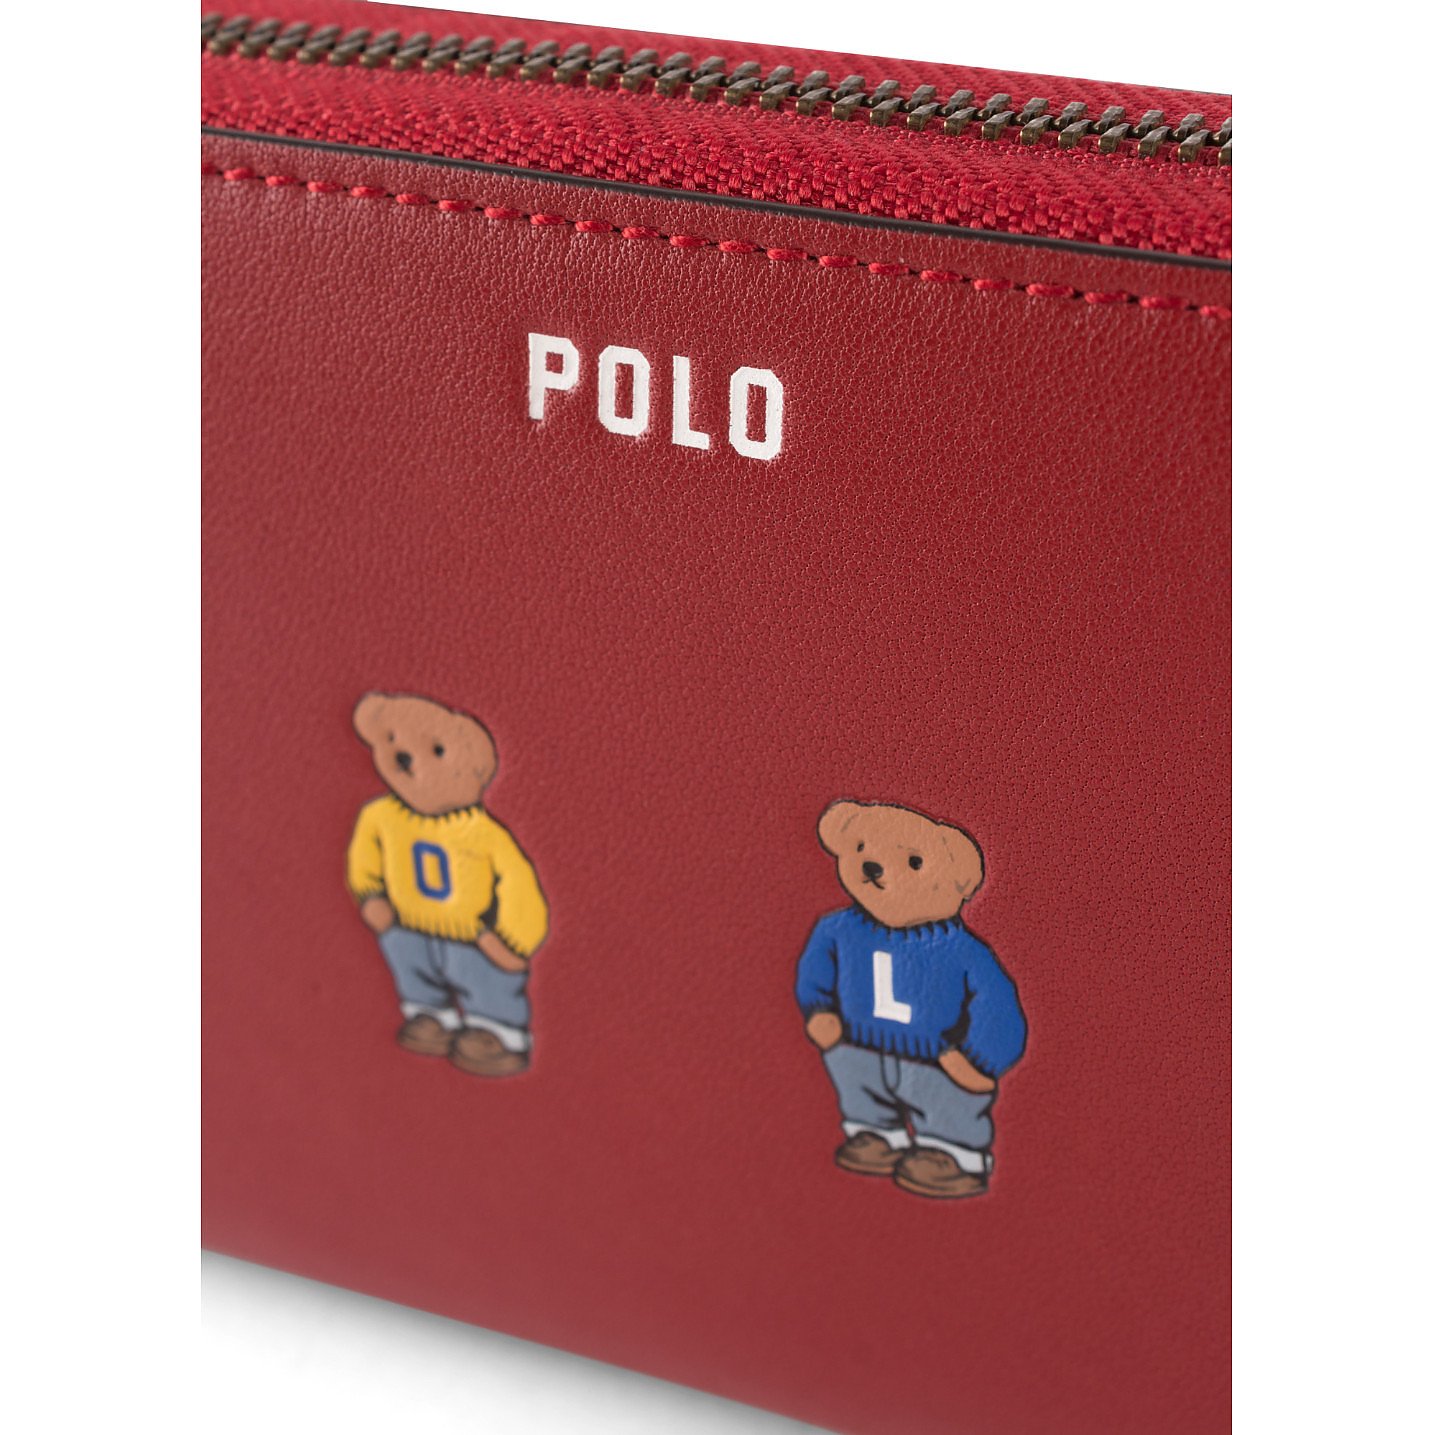 Rent or Buy Polo Ralph Lauren Bear Leather Zip Wallet from 